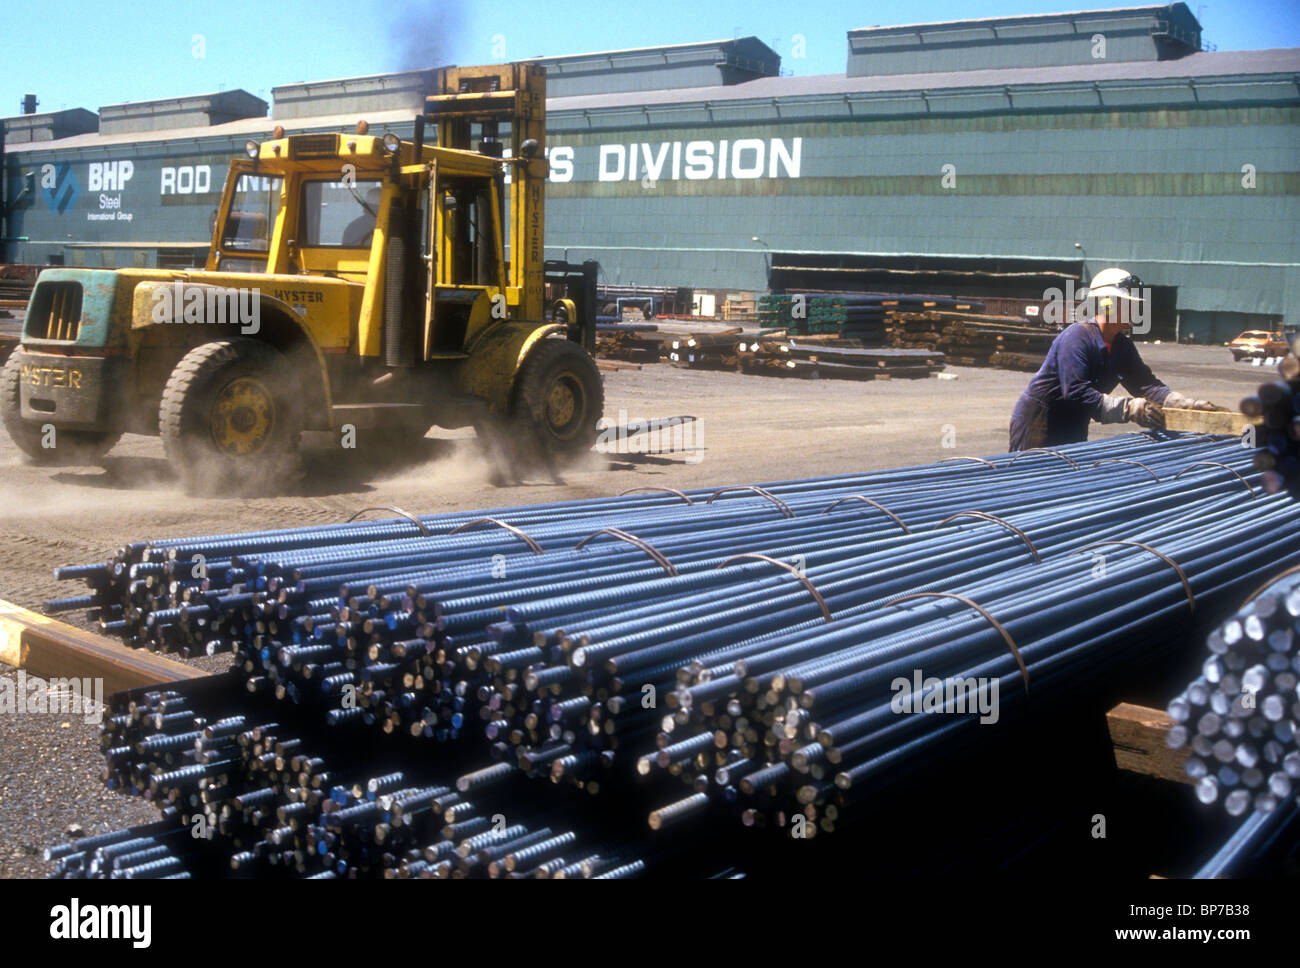 Division Rod and Bar BHP steelworks Newcastle NSW Australie, fermée en 1999 Banque D'Images